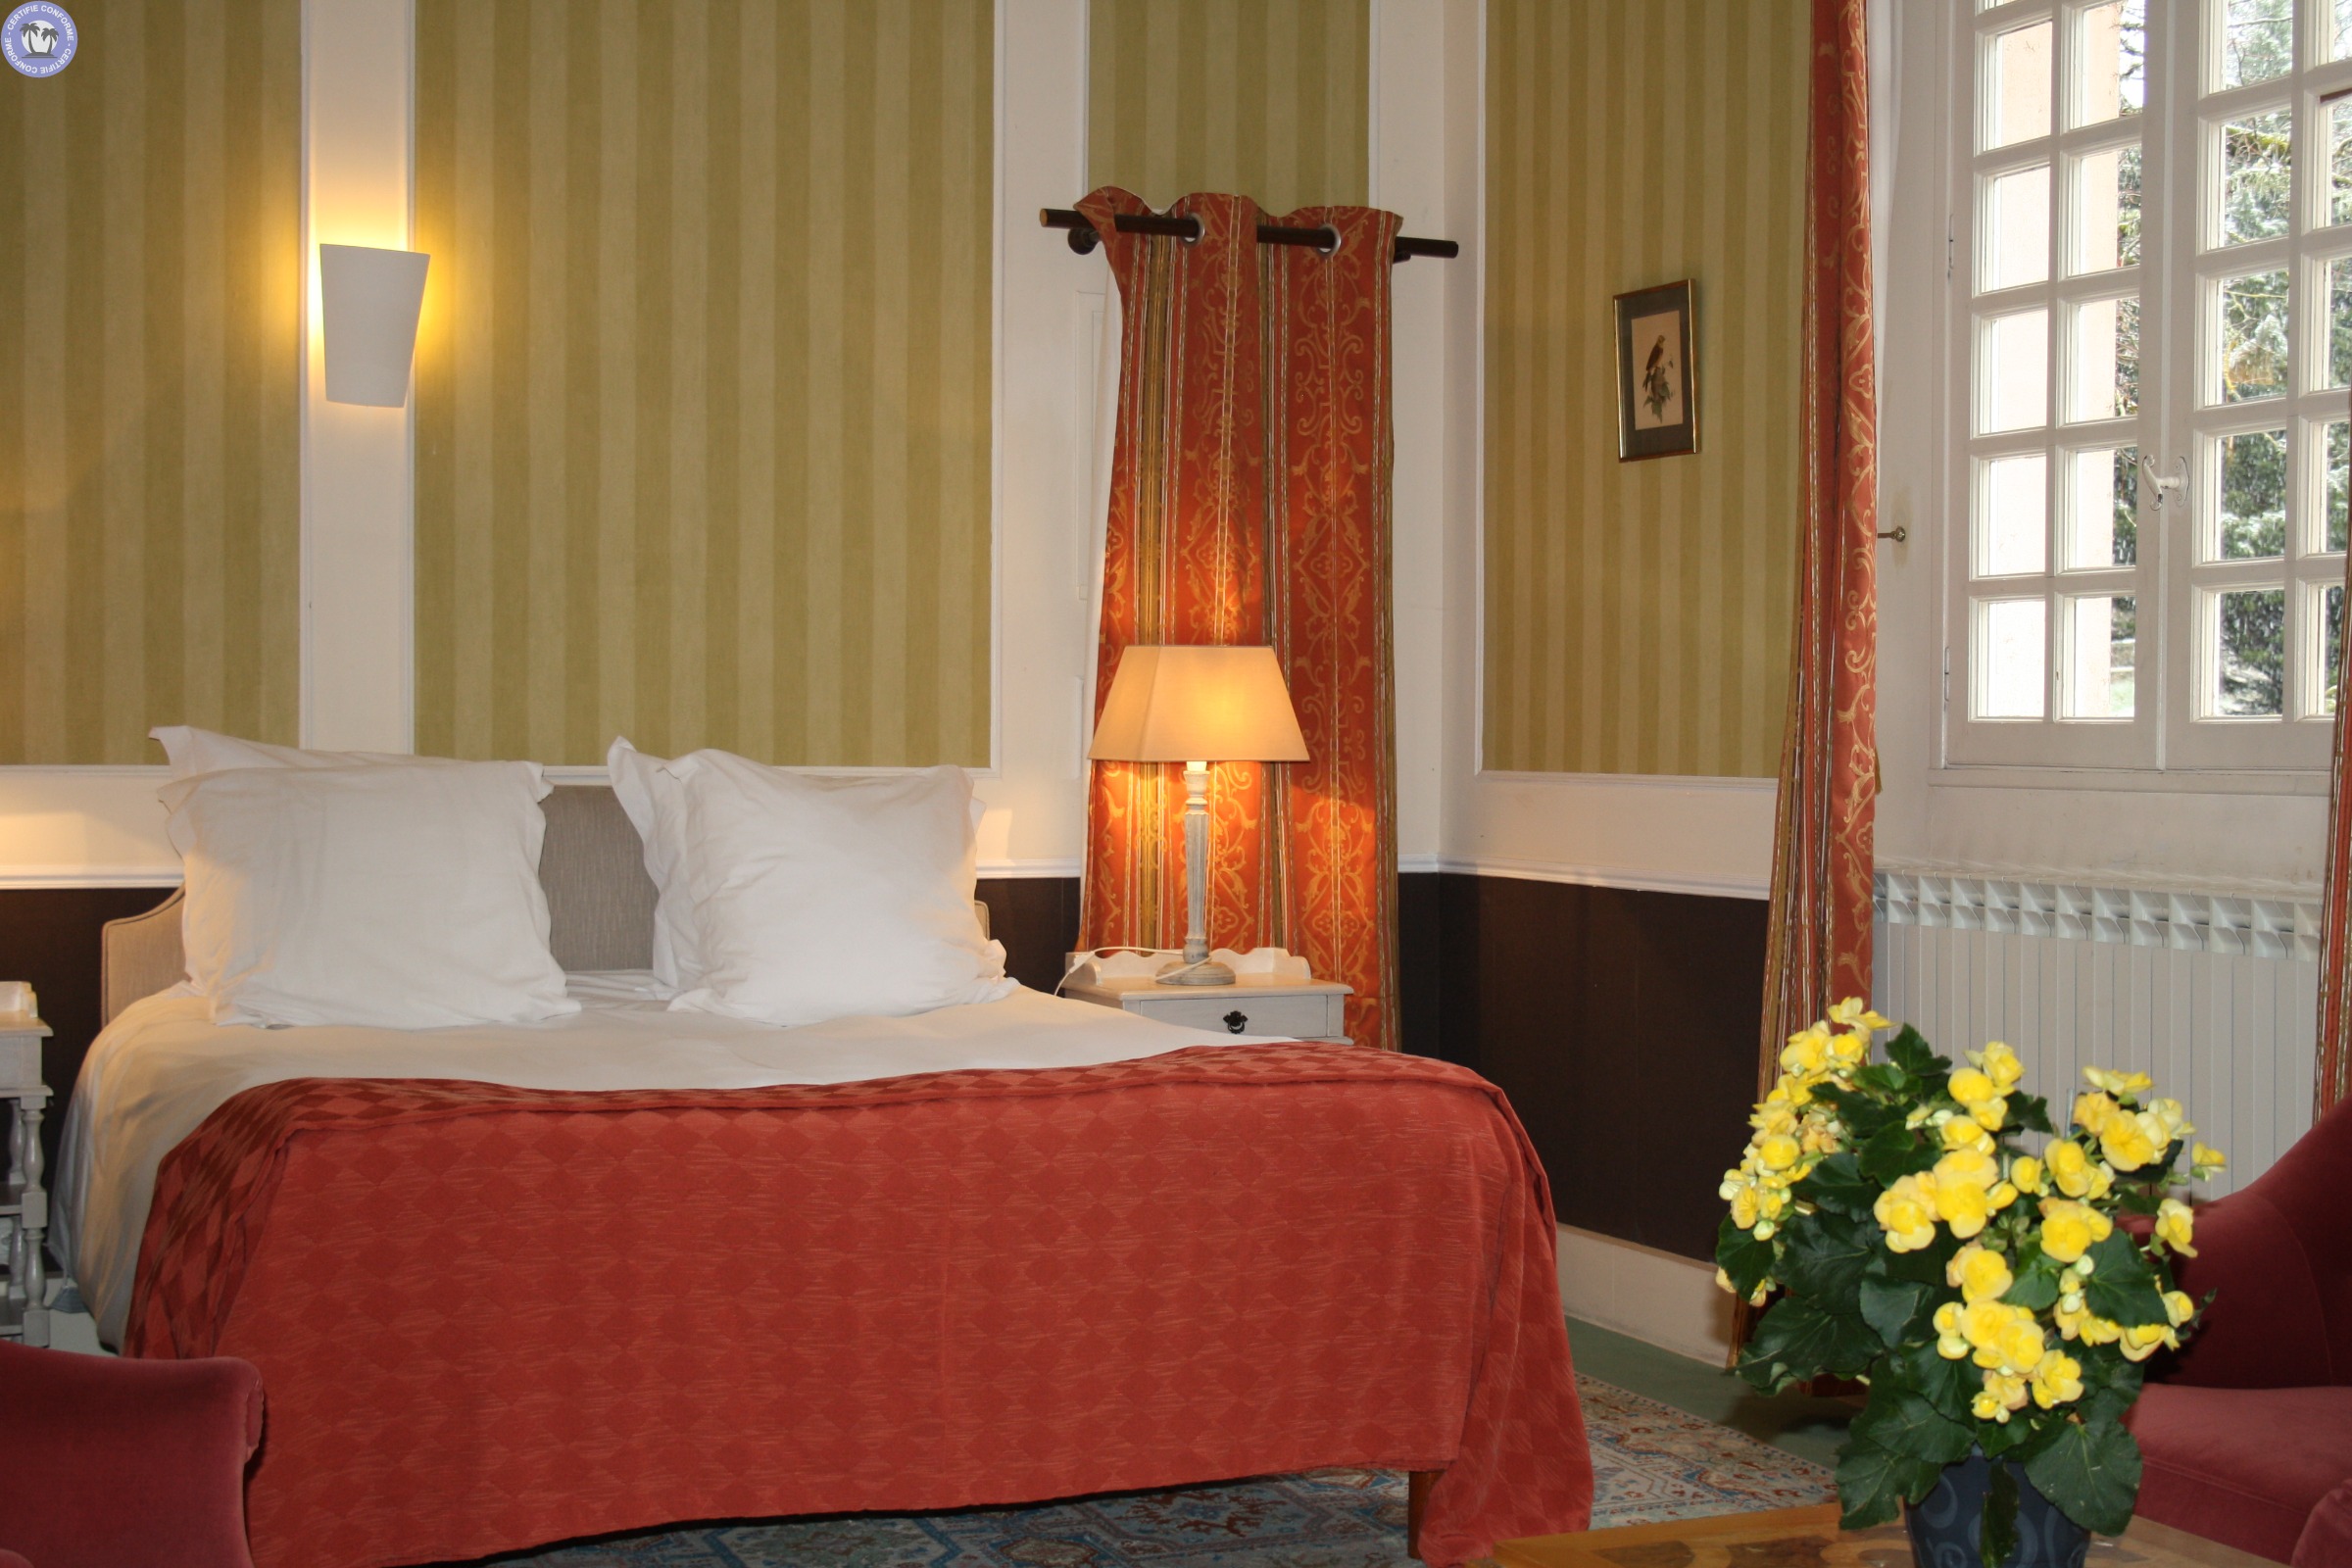 Hotellerie-Occitanie-Lozere-Chateau-d-Ayres13283542616472747578.jpg